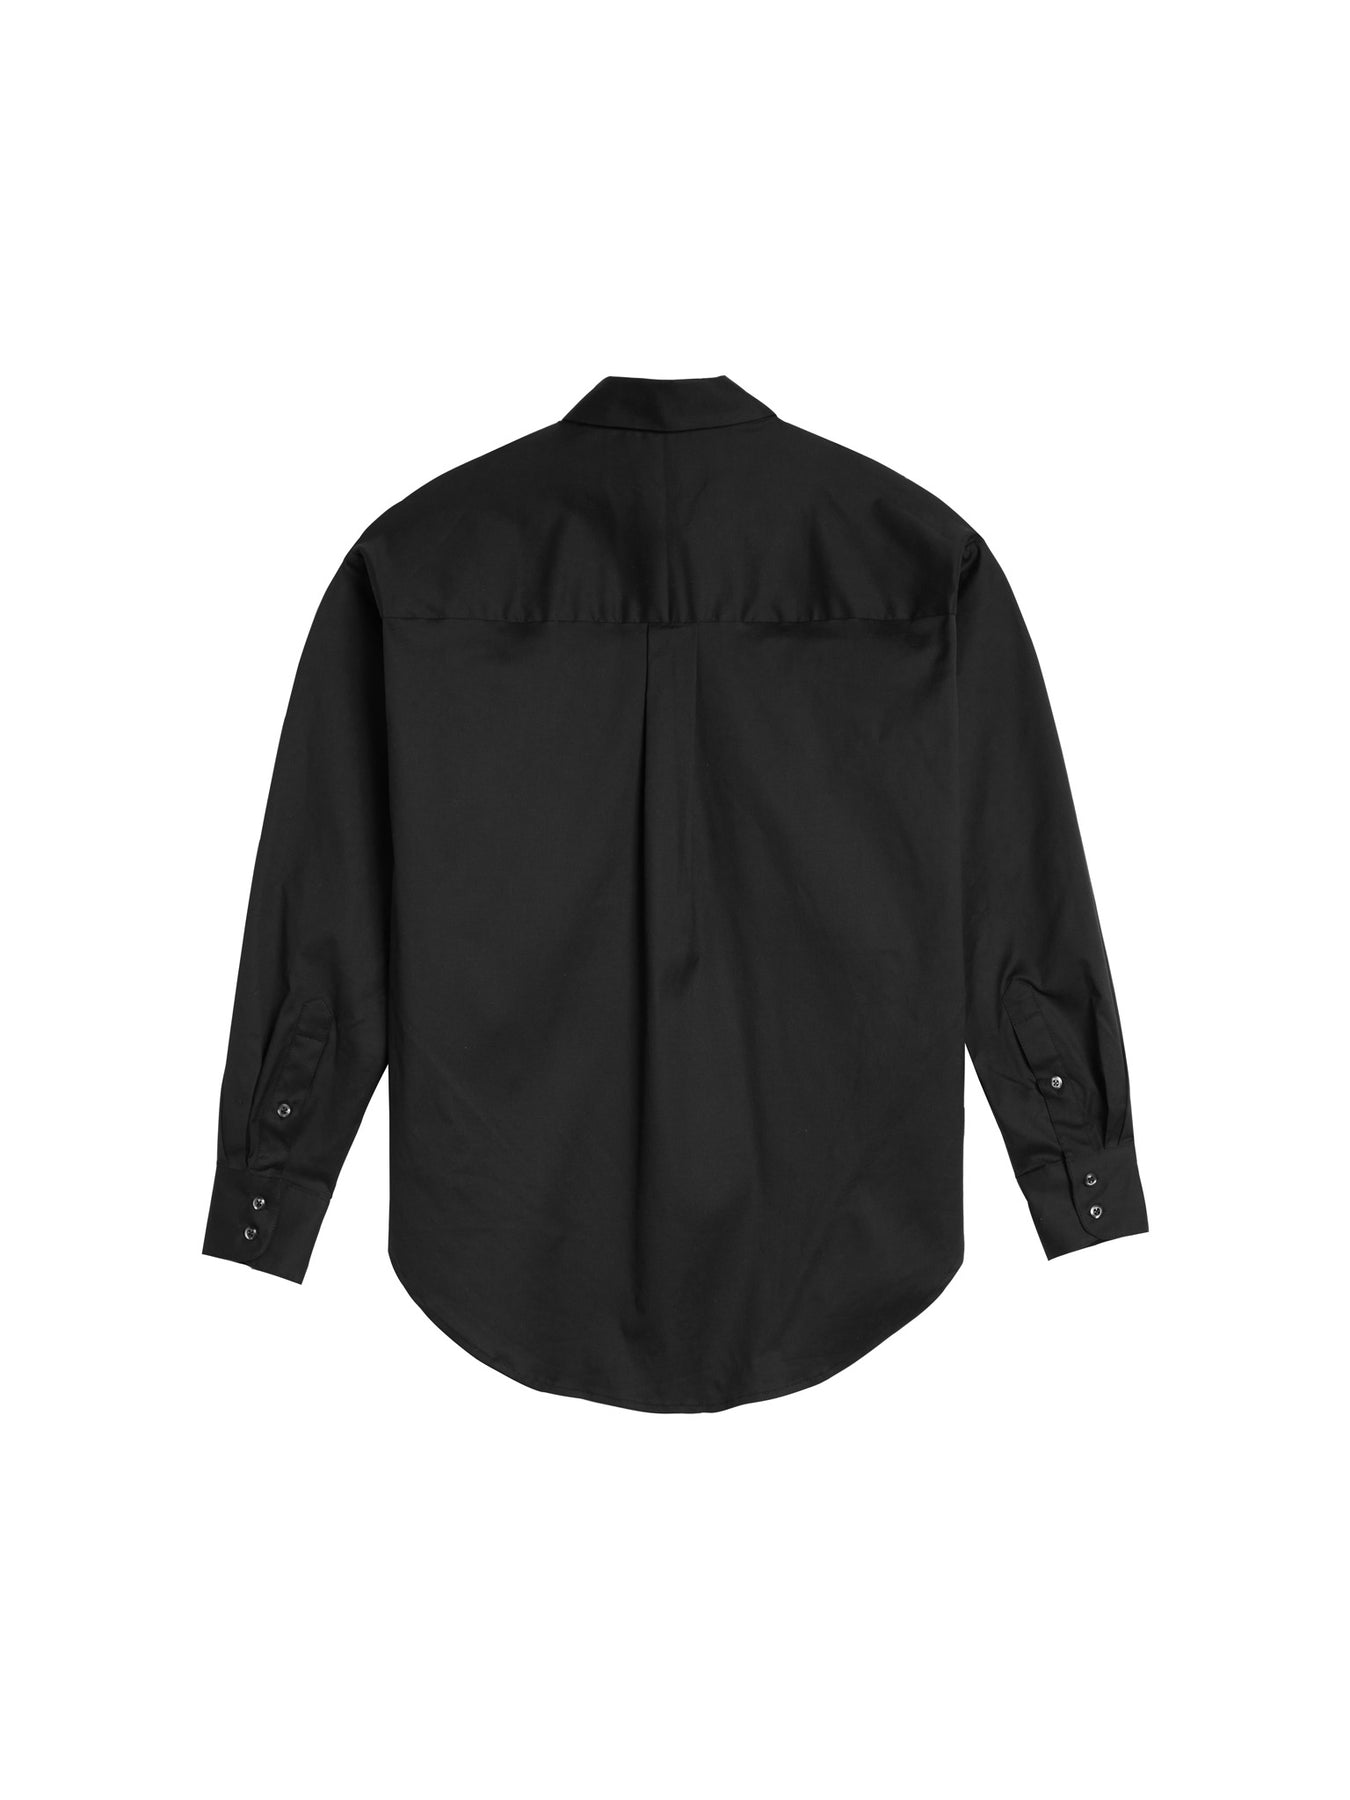 Fancy Black Shirt For Women 